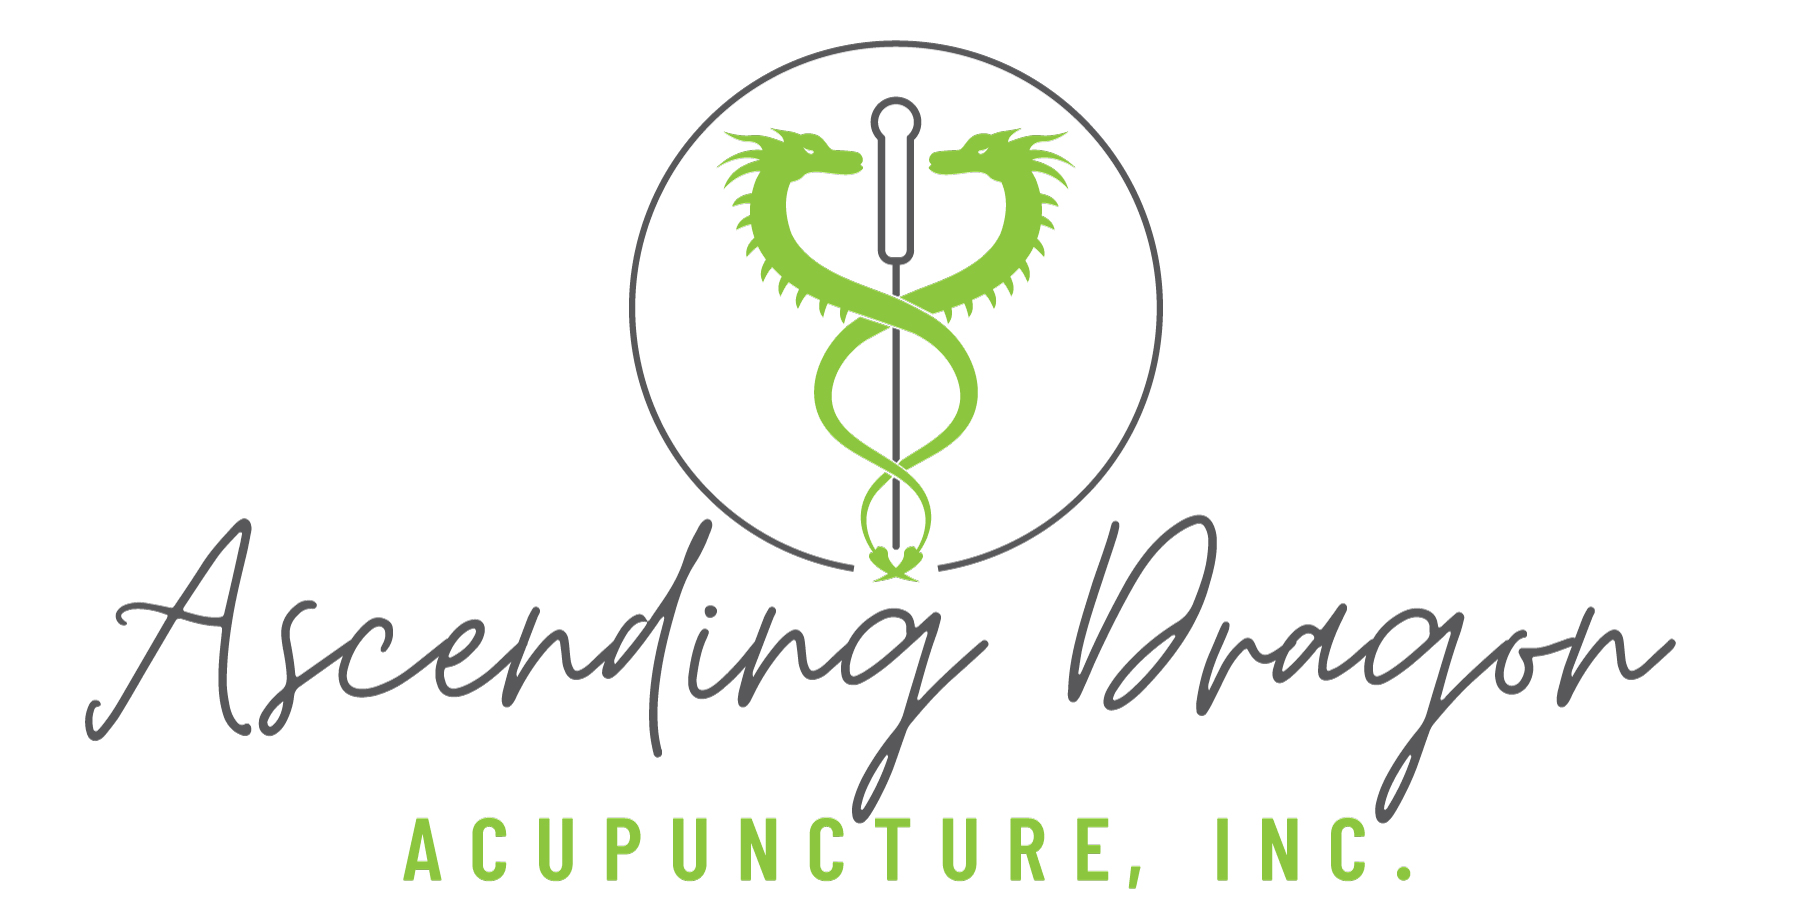 Ascending Dragon Acupuncture, Inc.